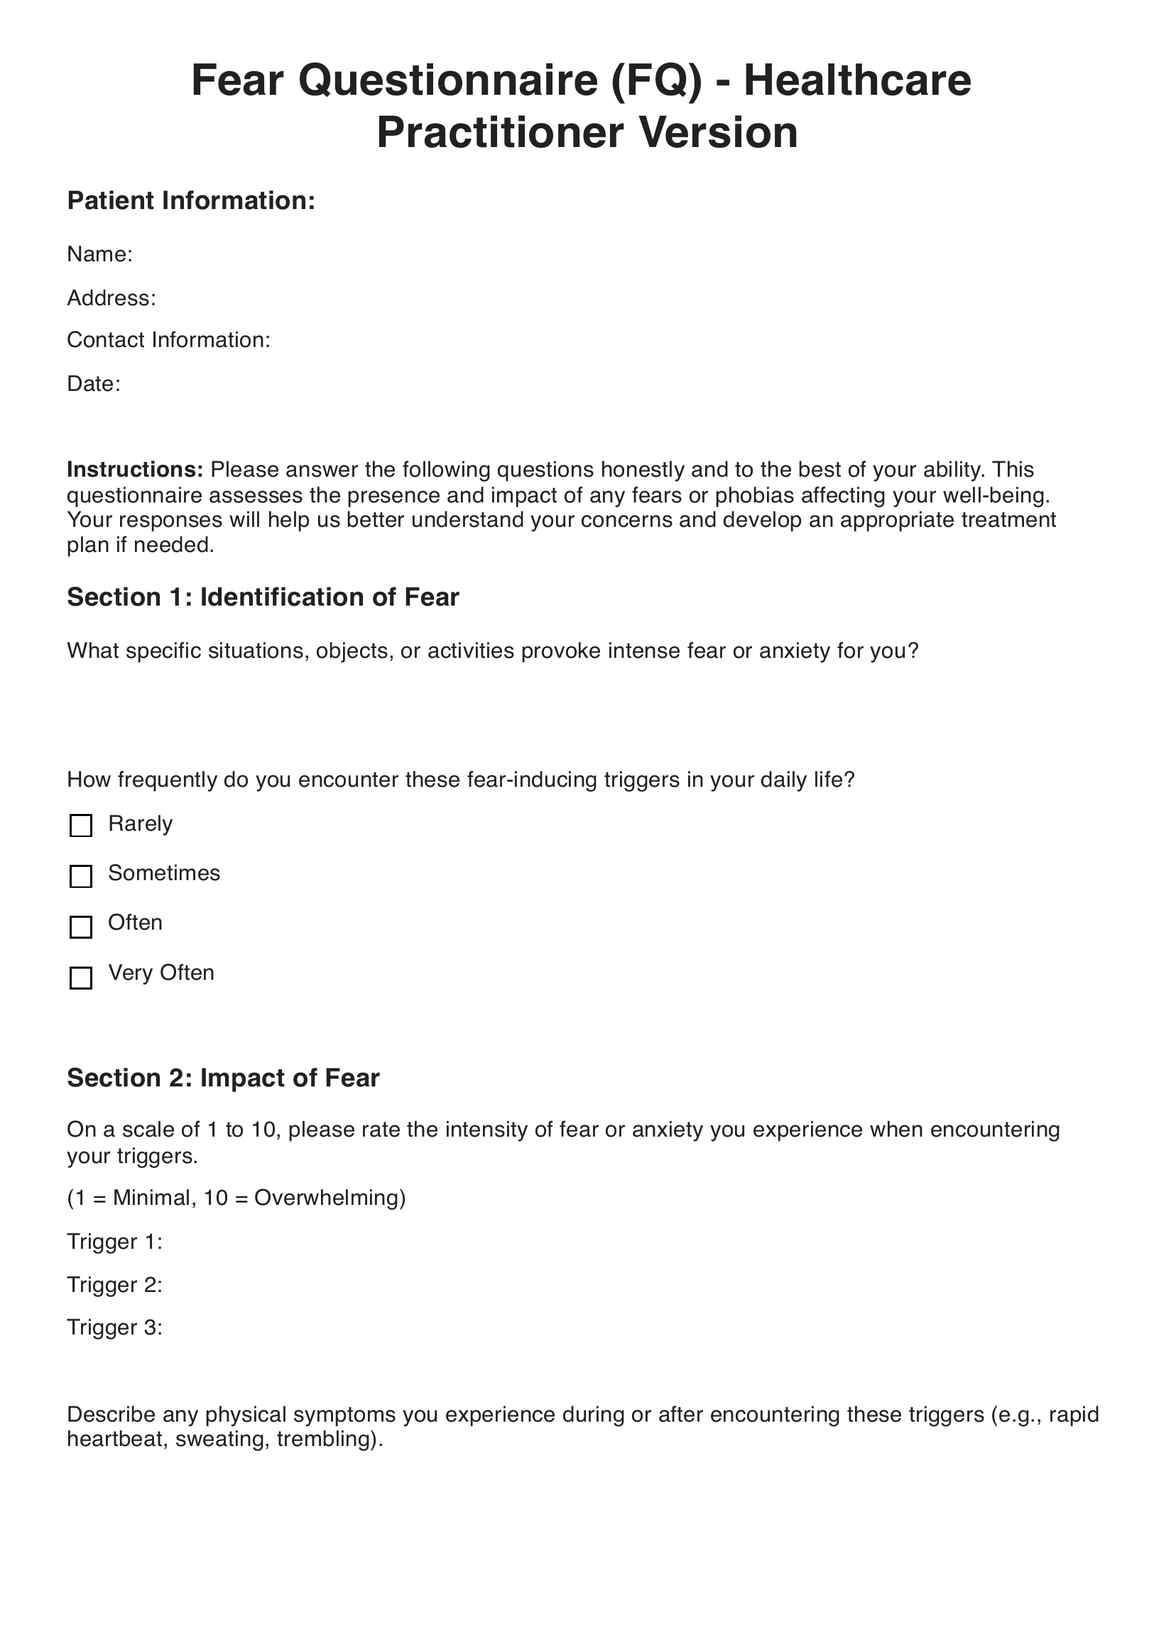 Fear Questionnaire (FQ) PDF Example